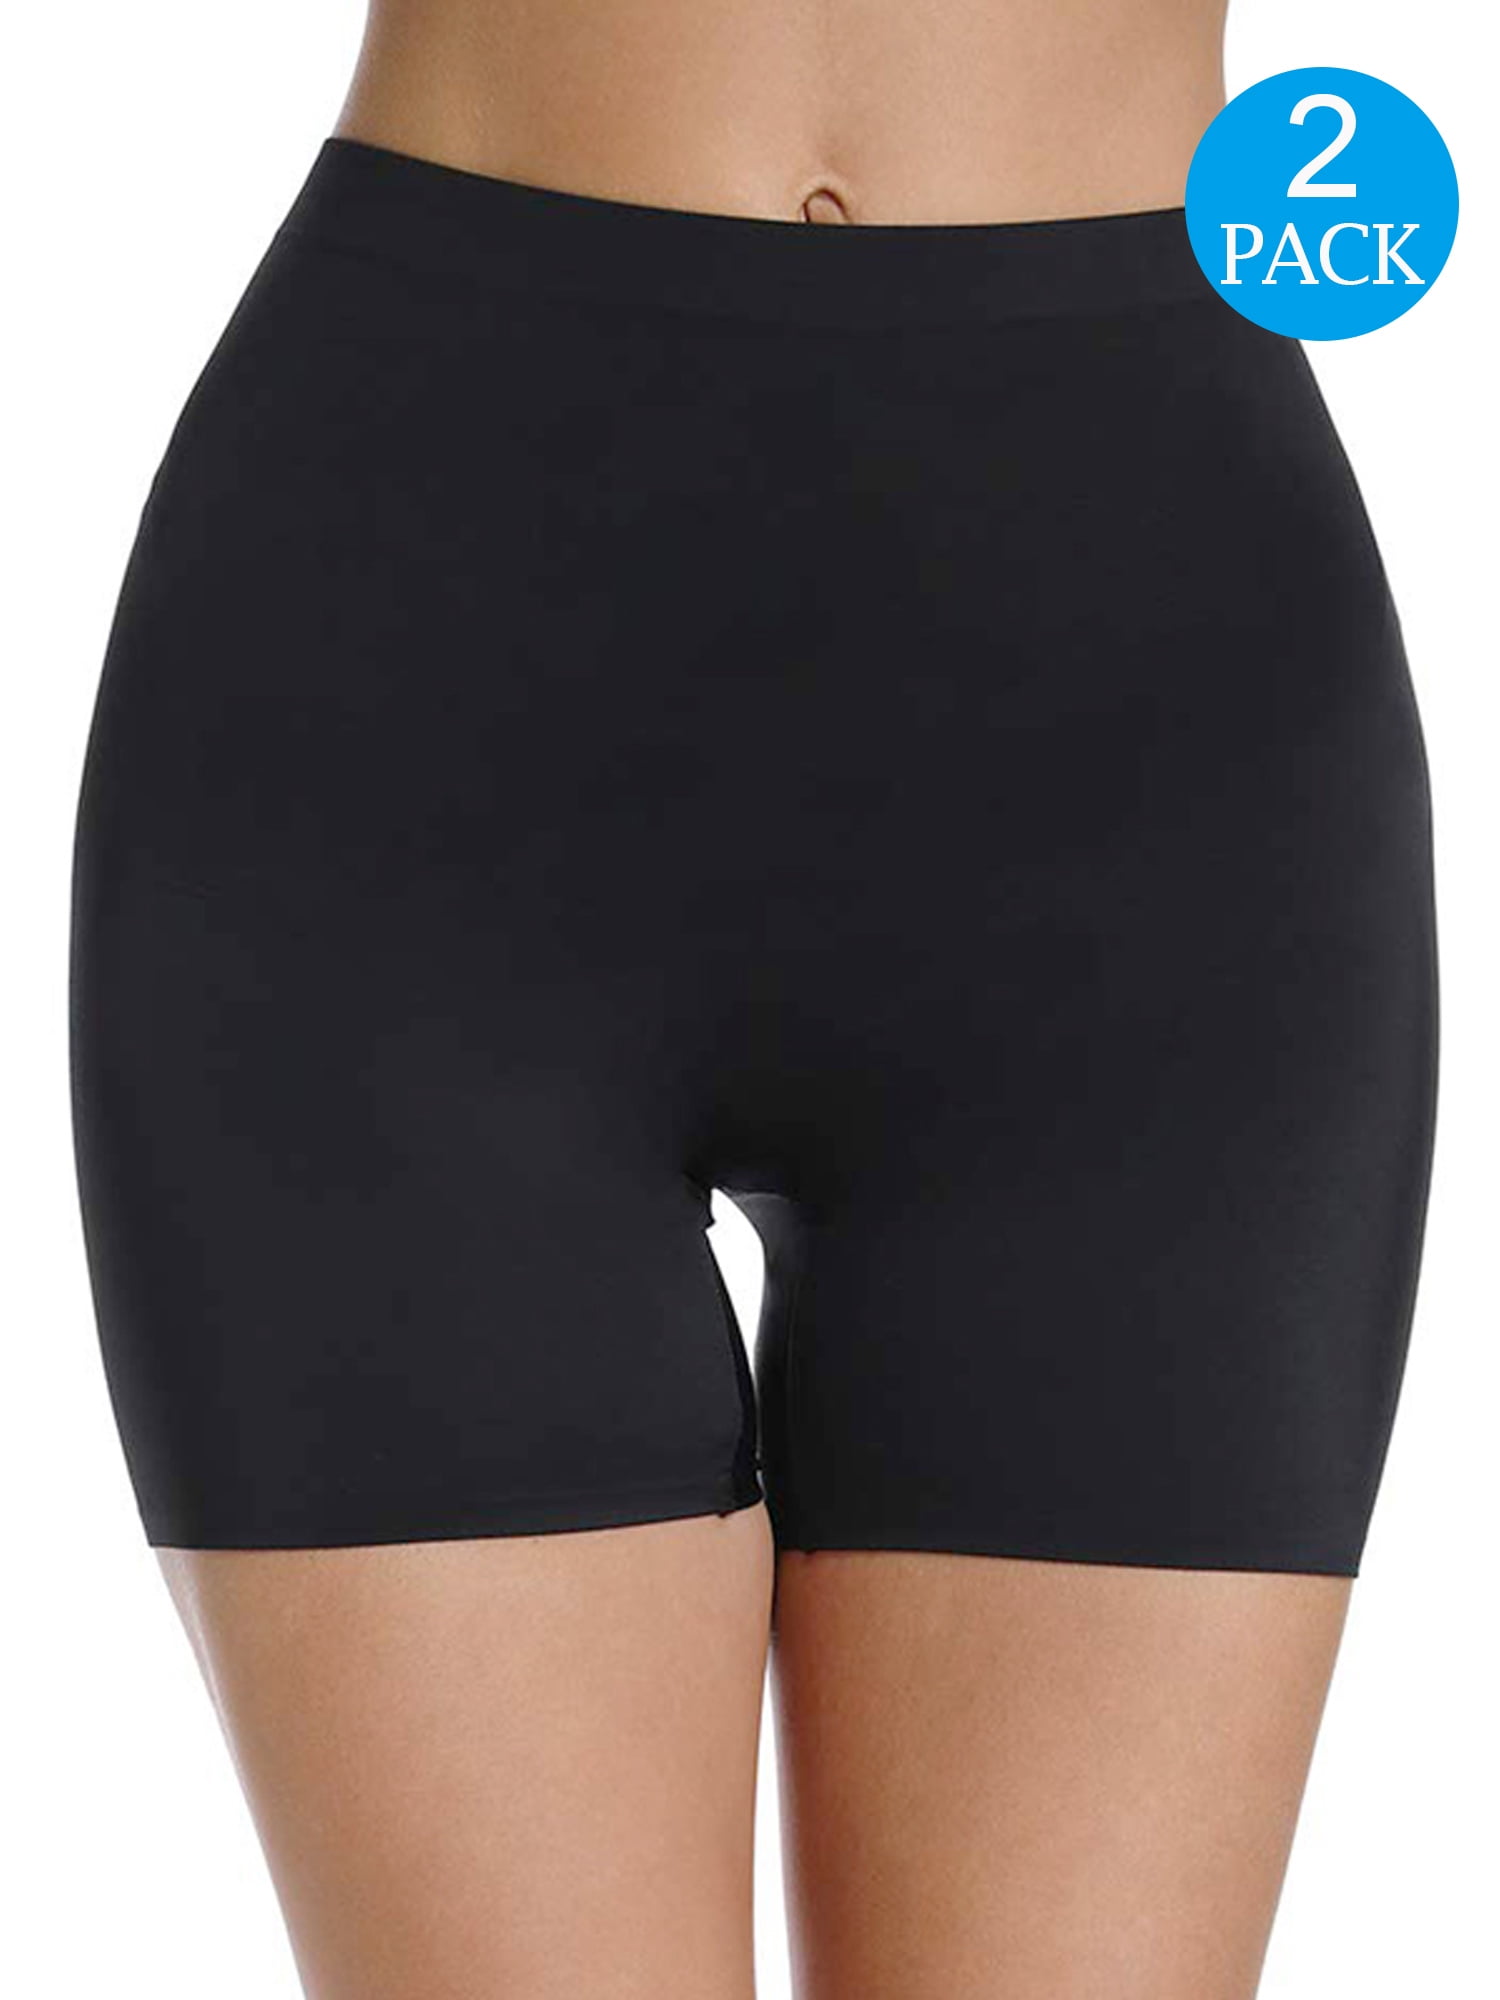 Seamless Shaping Boyshorts Panties for Women Tummy Control Shapewear Under Dress Slip Shorts Underwear 